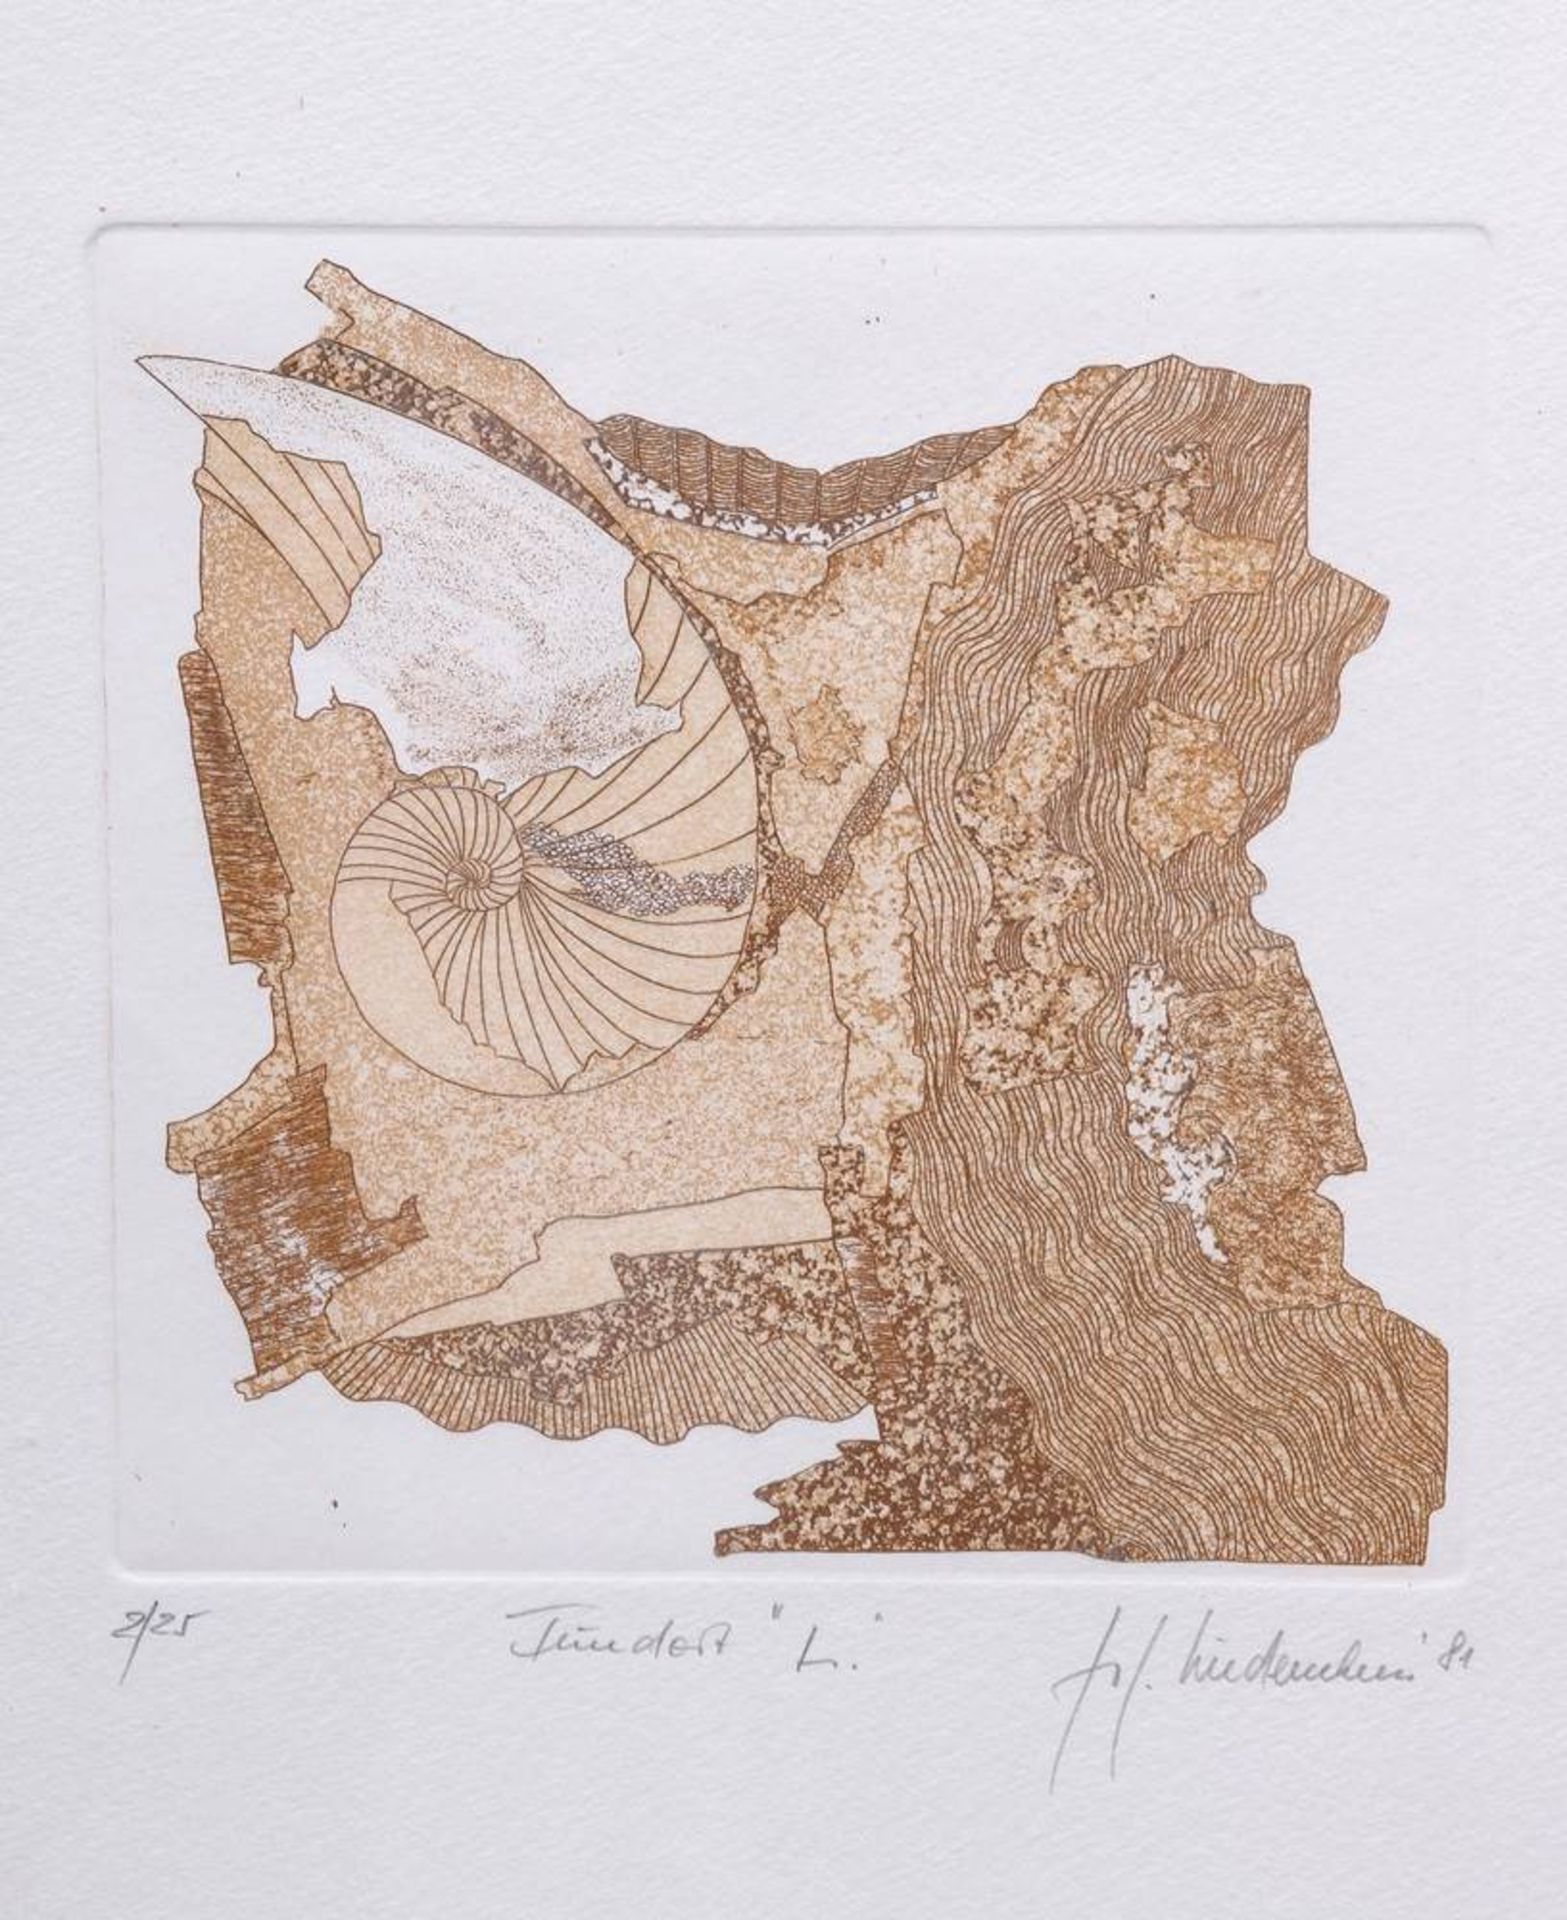 Jo J. Lindemann"Fundort" (ammonite), 1981, colour etching, signed in pencil lower right, Ex. 2/25, - Bild 2 aus 2